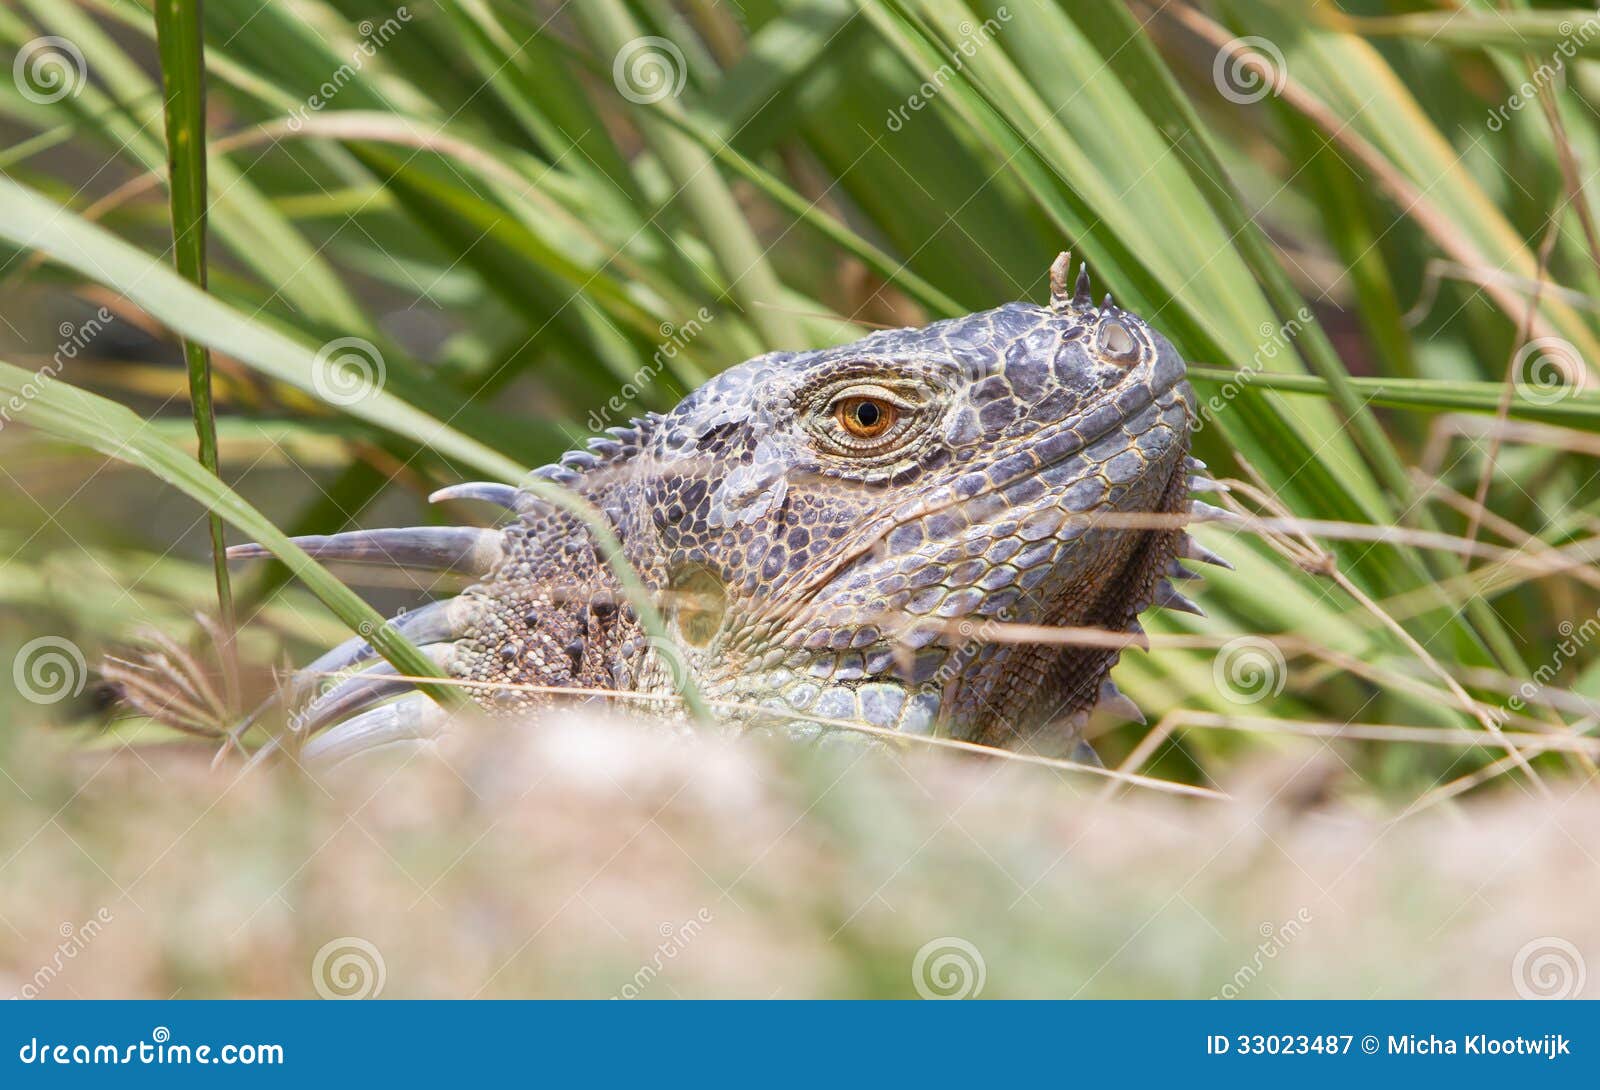 iguana natural habitat